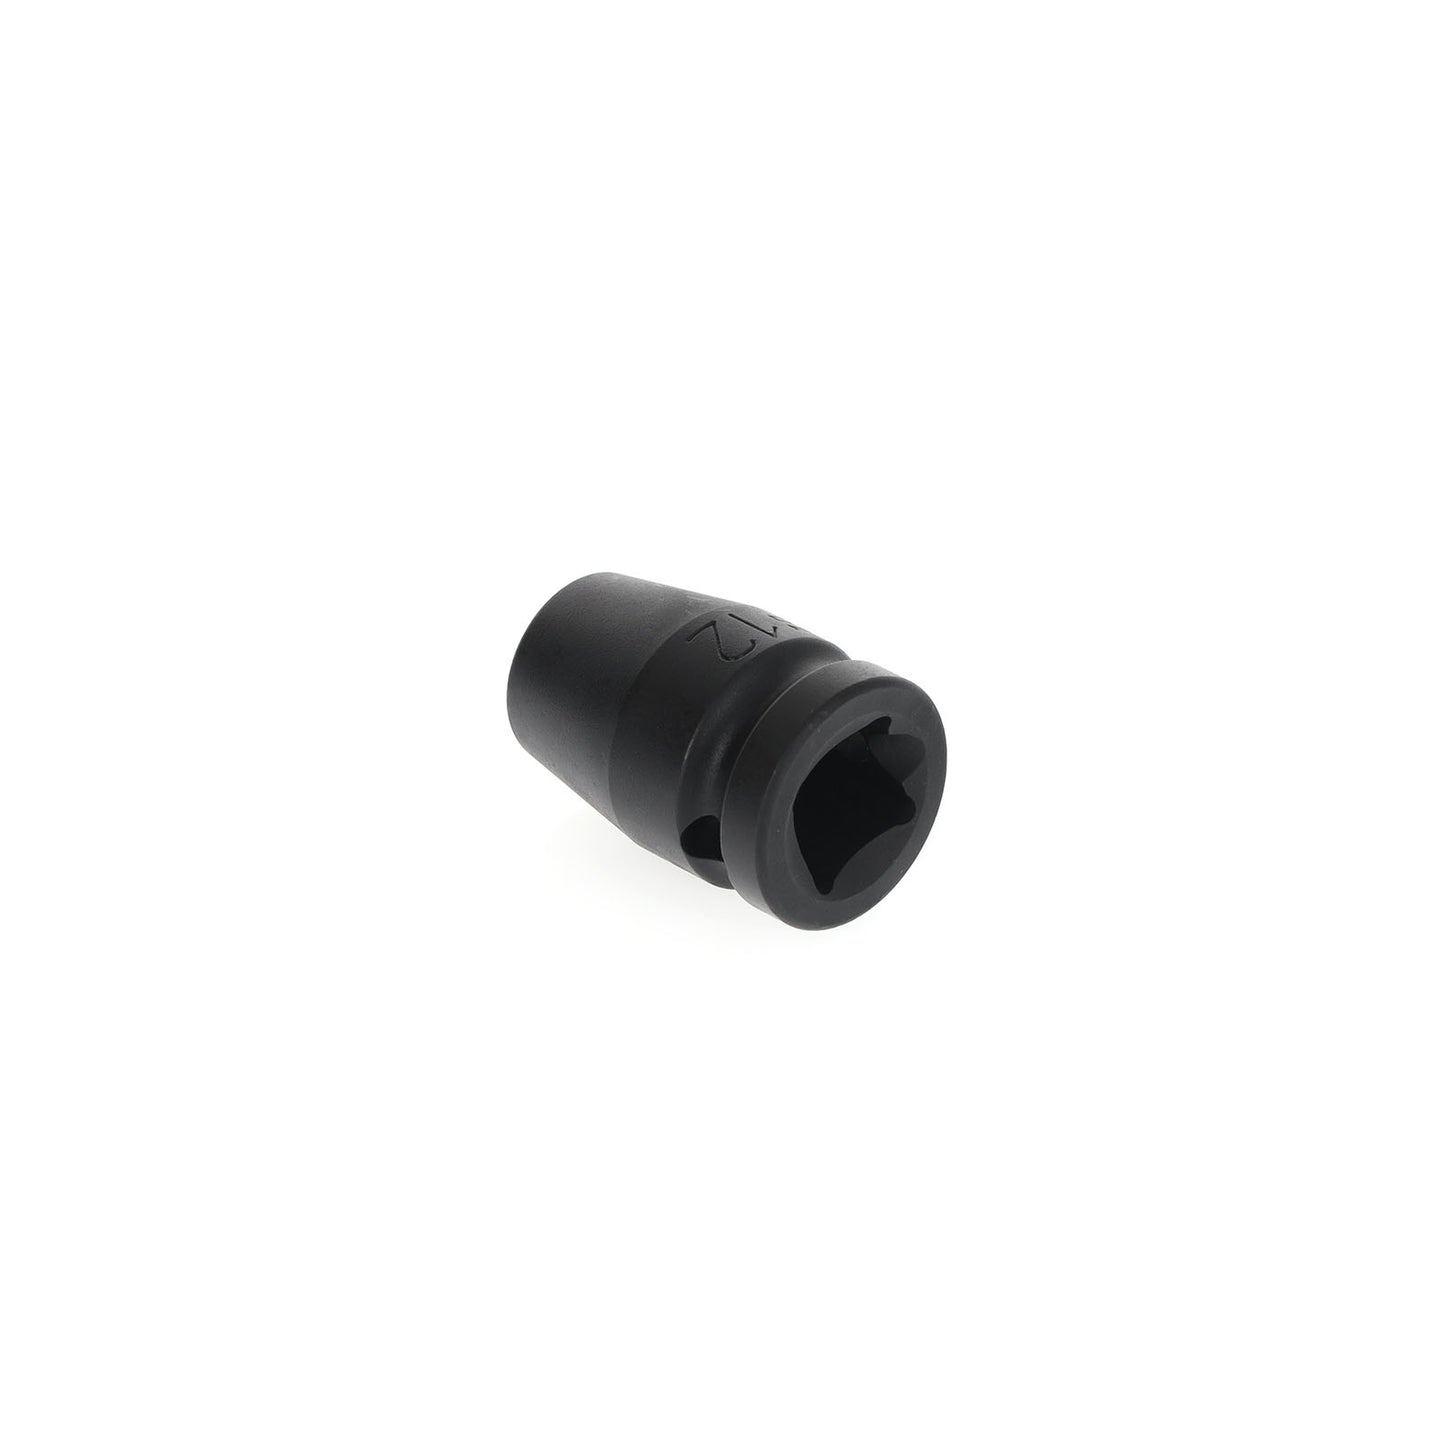 GEDORE K 19 12 - Hexagonal Impact Socket 1/2", 12 mm (6160440)